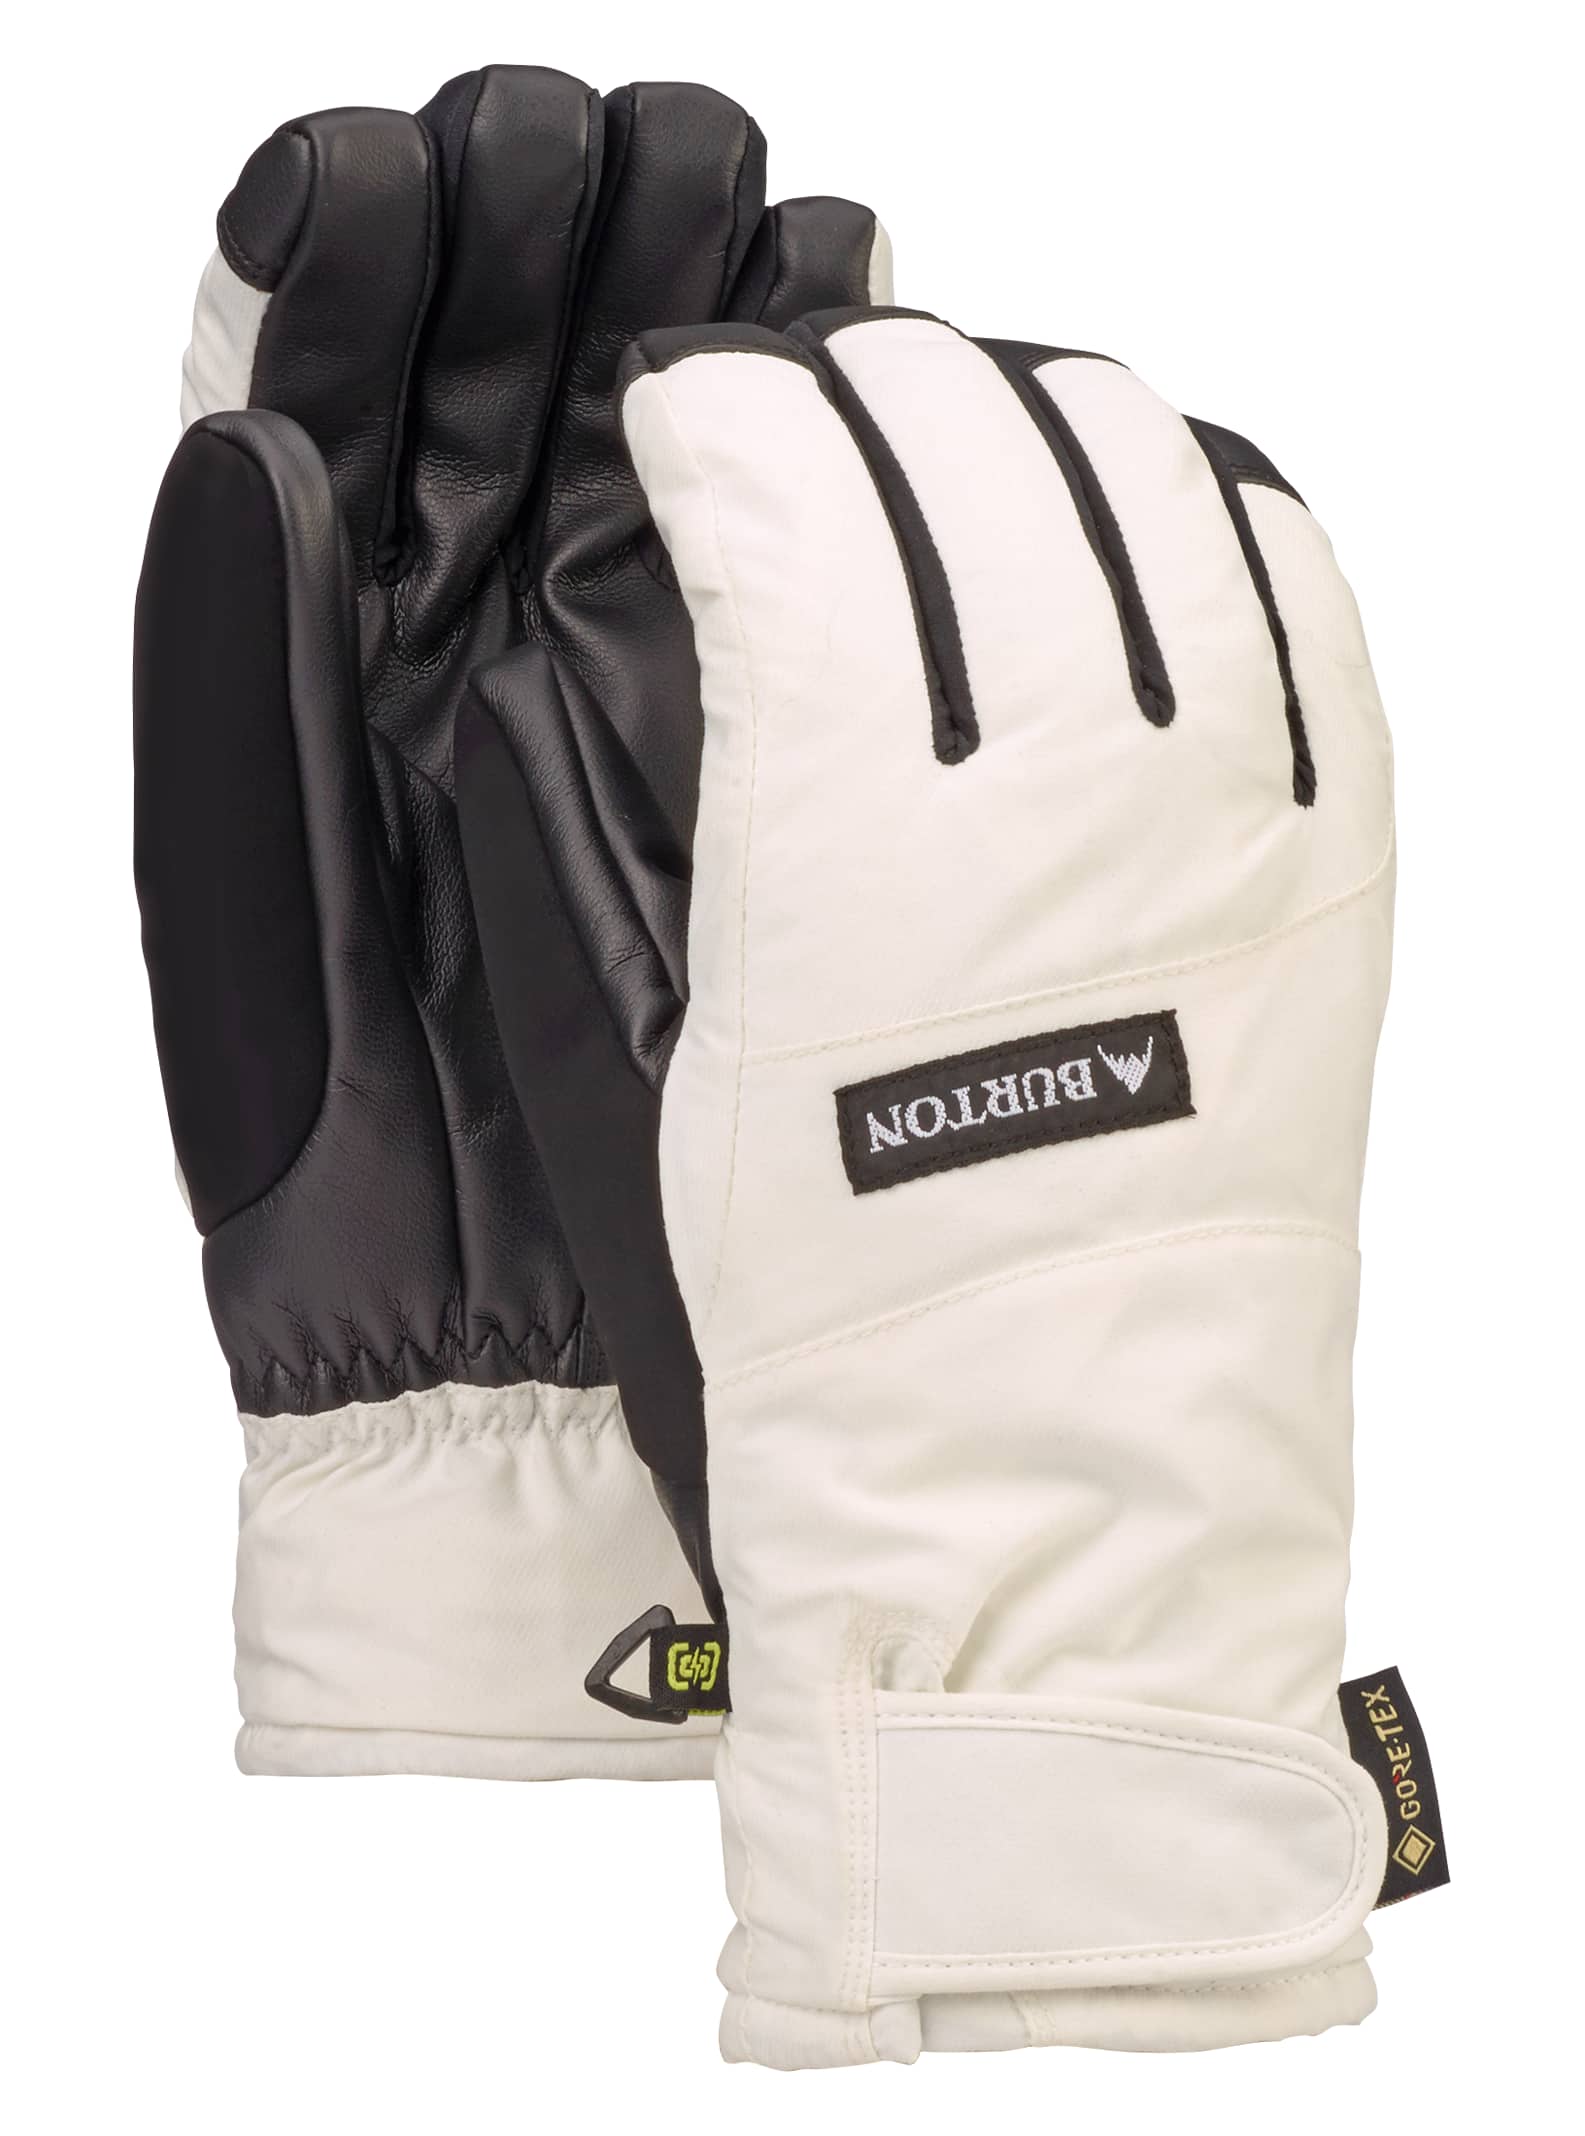 Burton Women's Reverb GORE-TEX Glove, Stout White, L